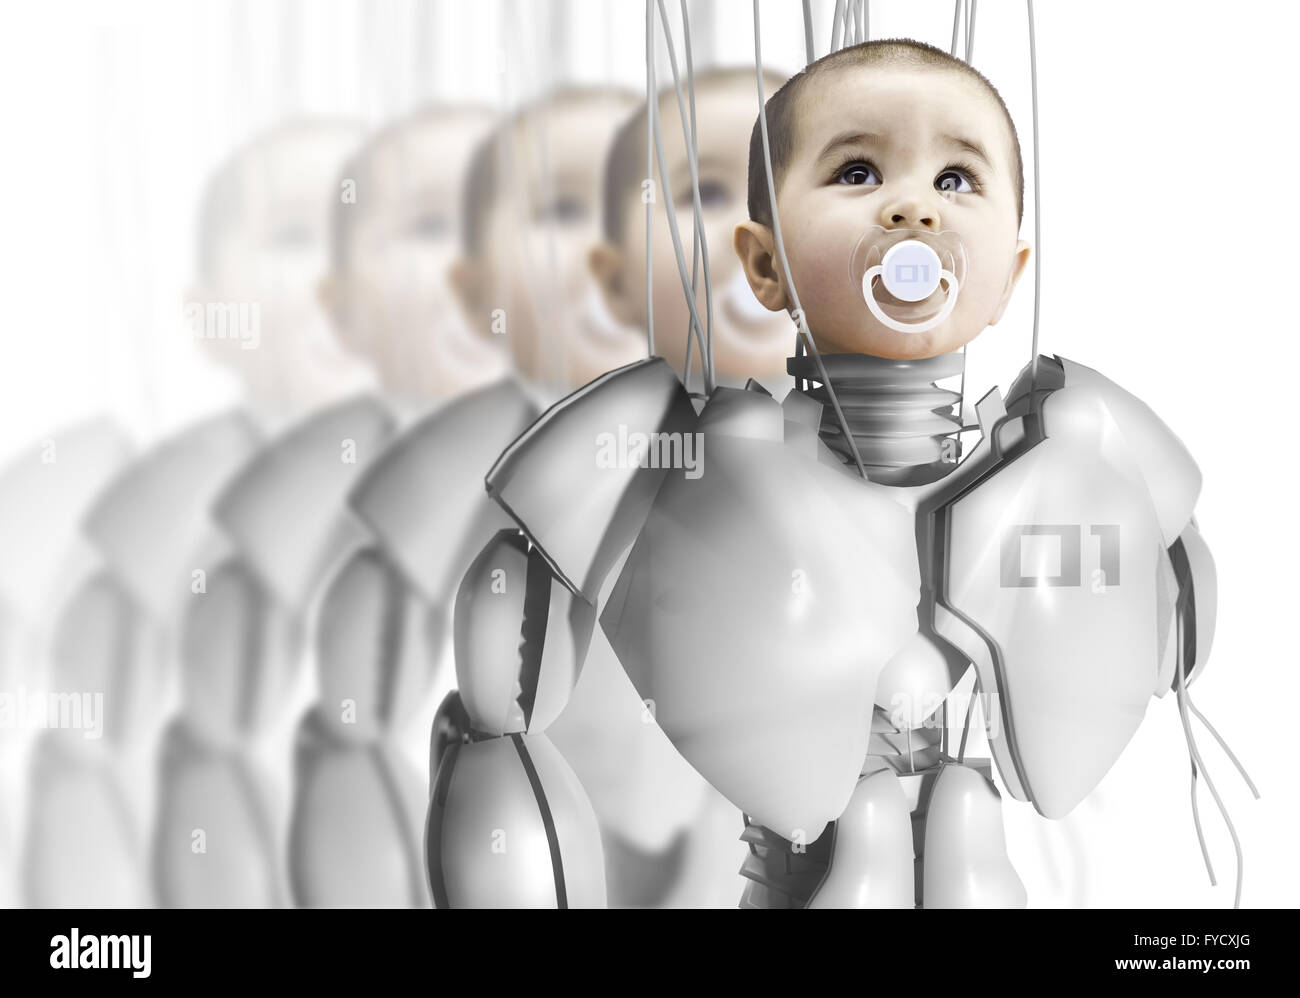 Child robot, creating clones, genetic engineering Stock Photo